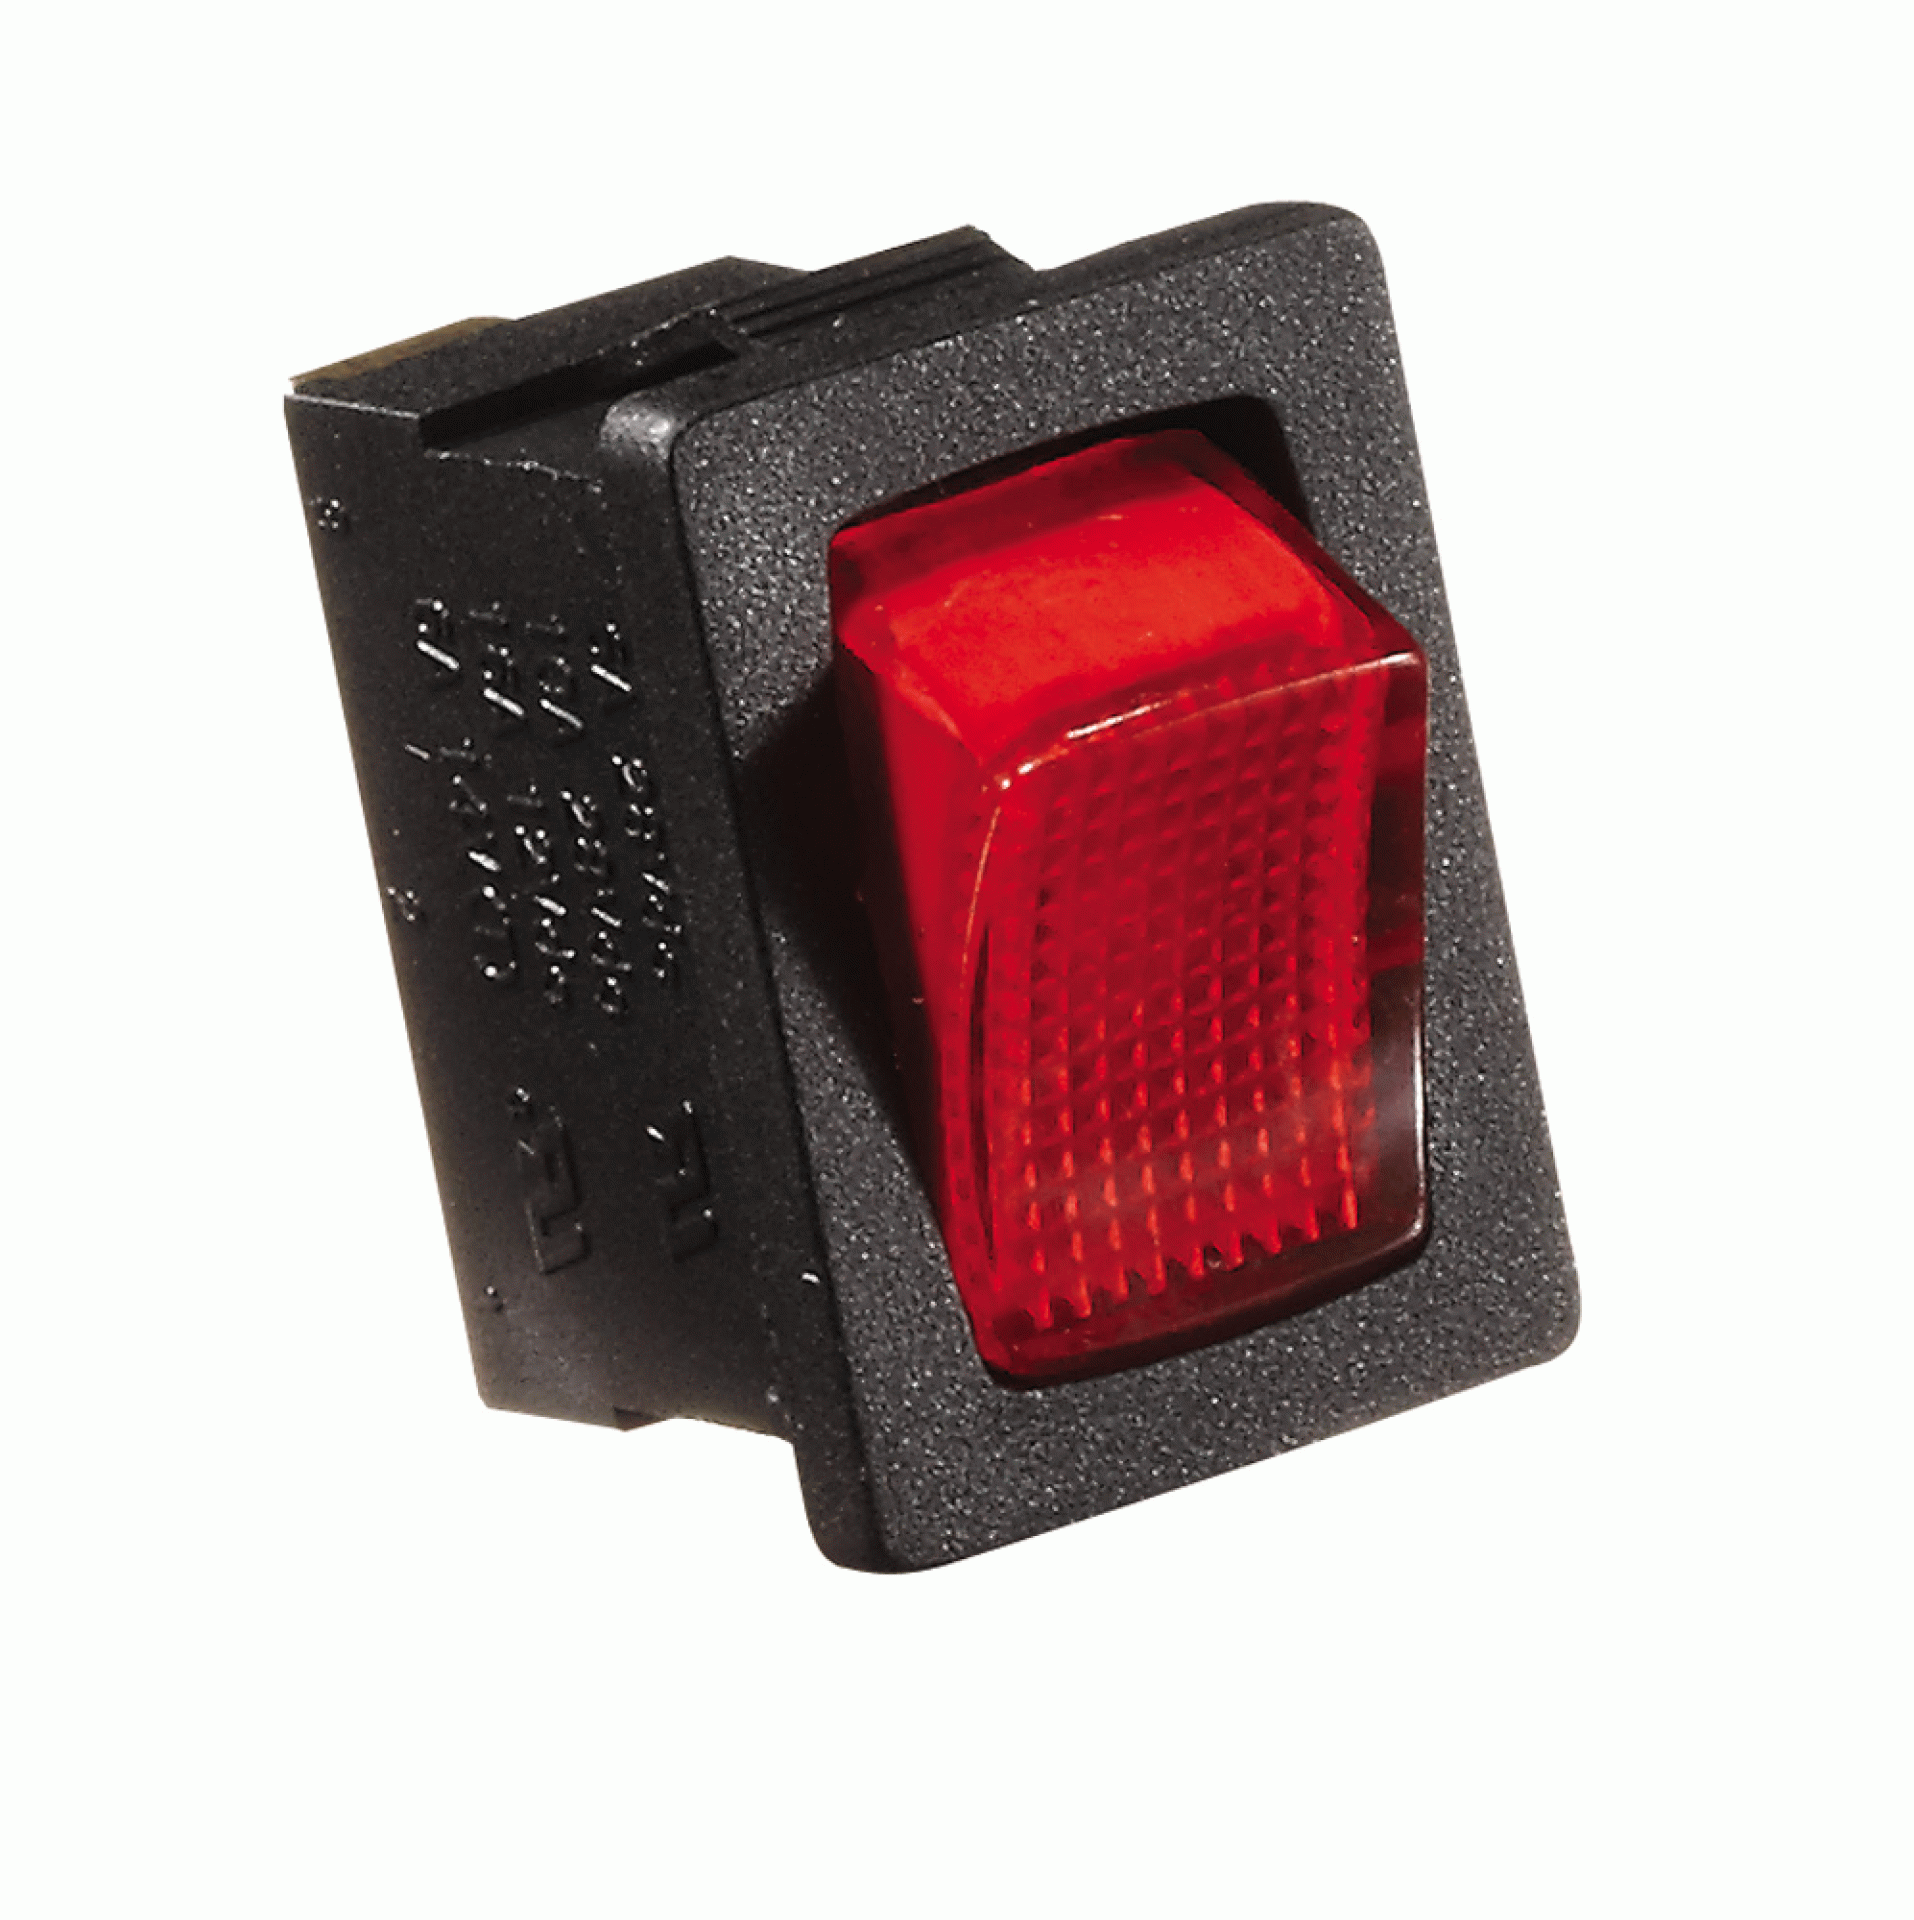 RV DESIGNER COLLECTION | S481 | Rocker Switch On/Off Illuminated Black/Red 20 Amp